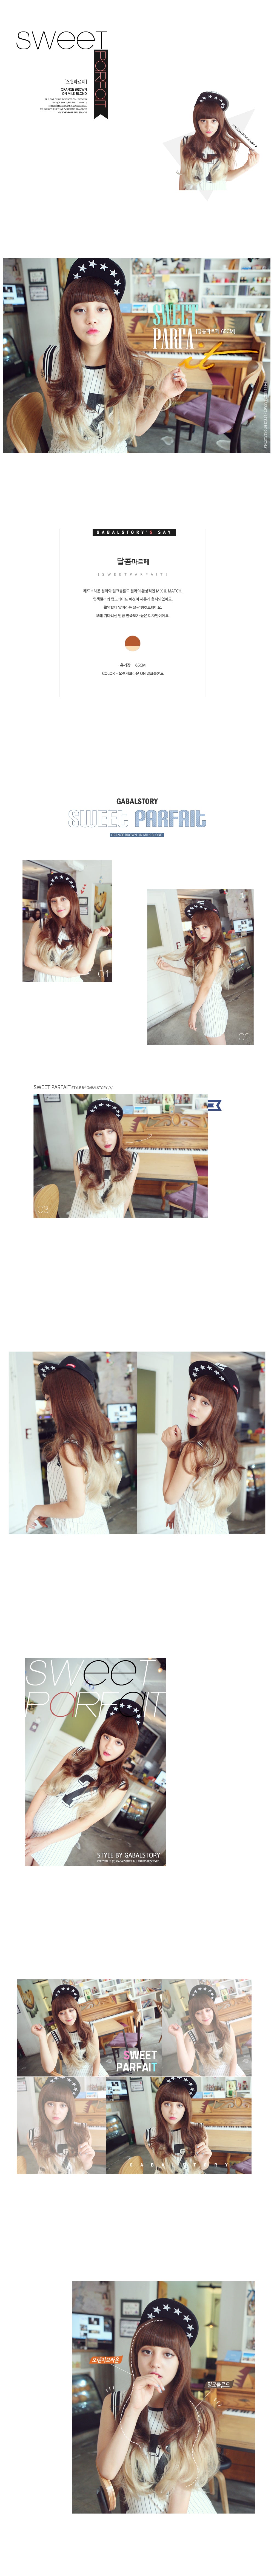 korean beauty fashion wig Premium Wig Sweet Parfa Straight Hair Wavy End Orange Brown